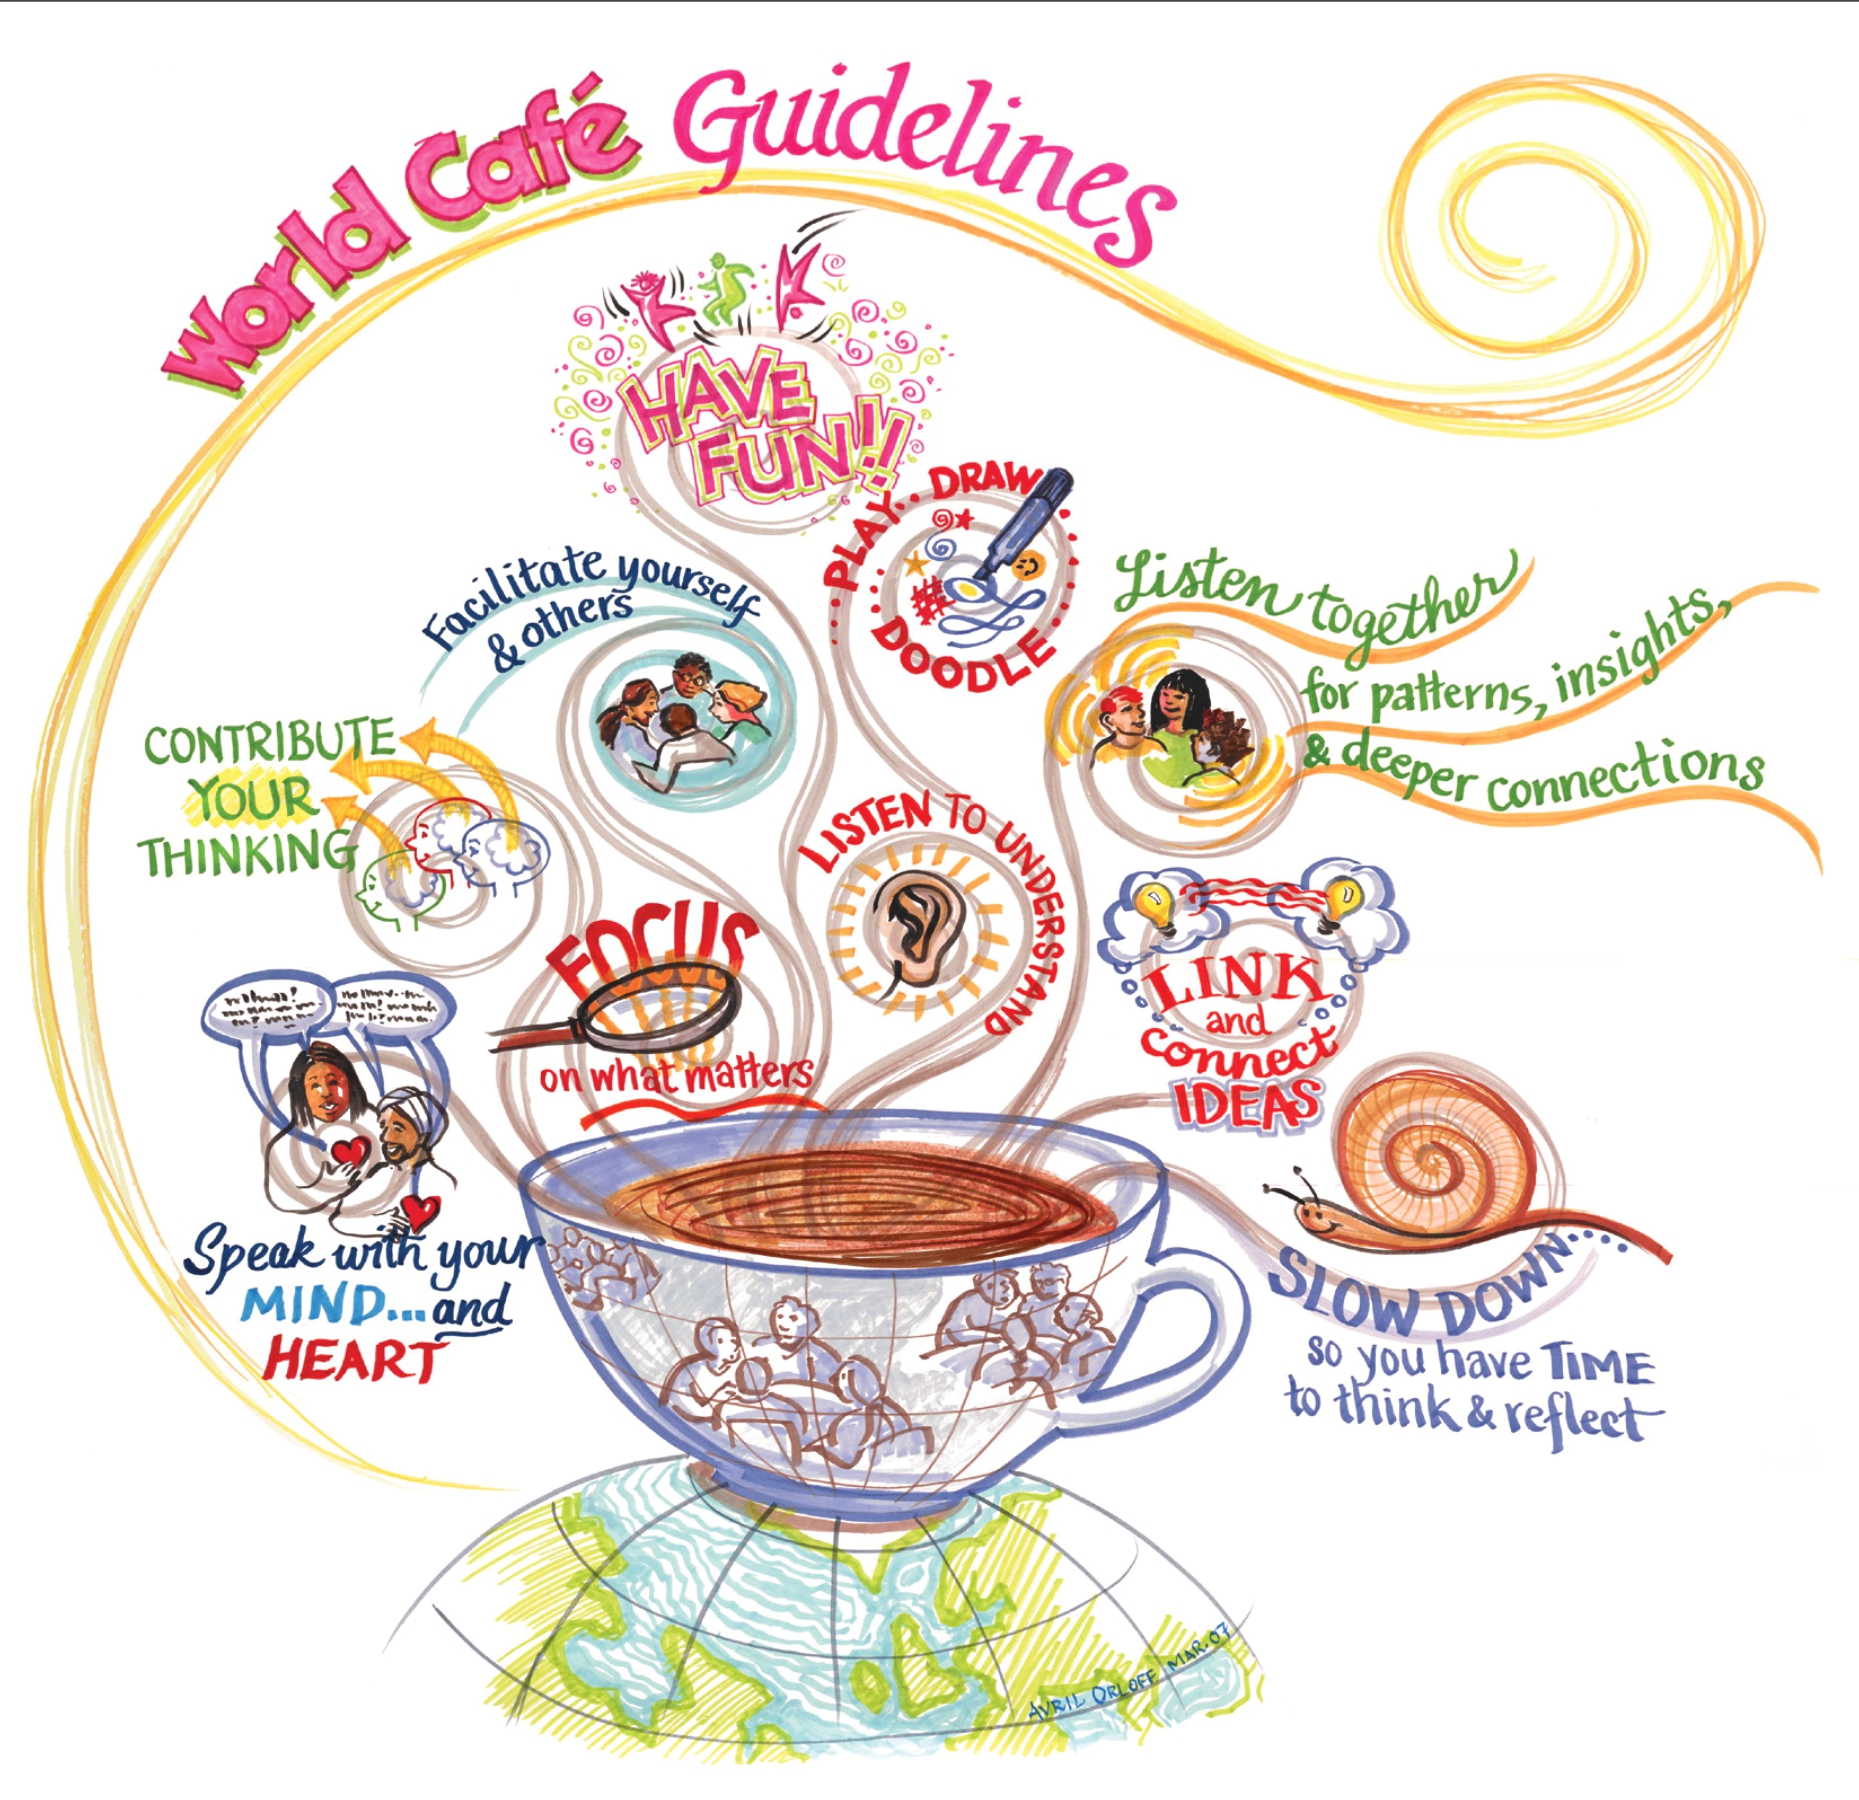 World café guidelines